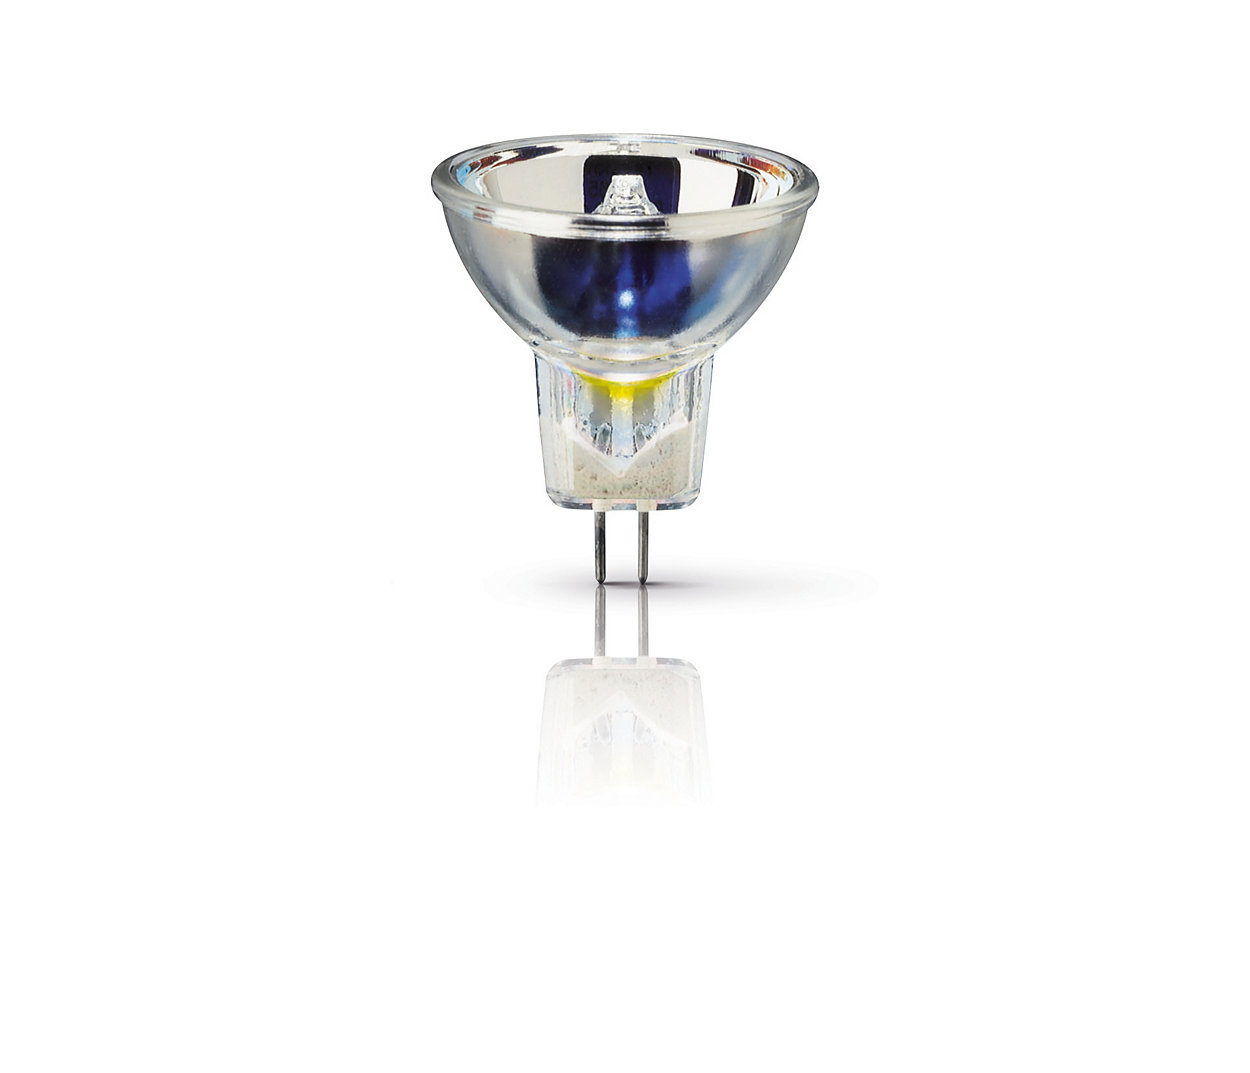 Halogen reflector lamps – proven reliability